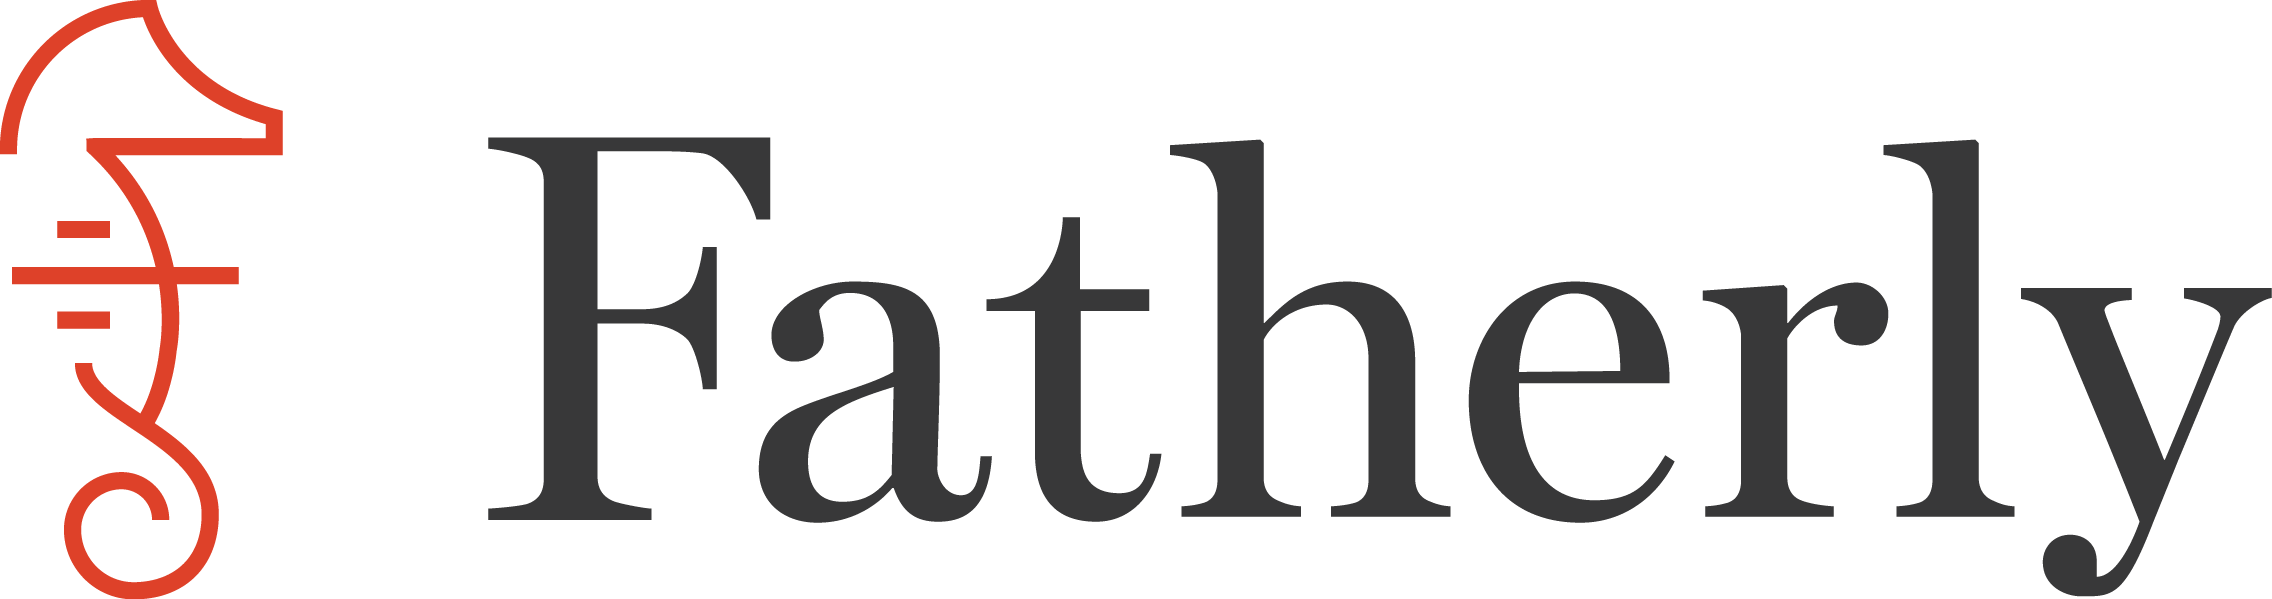 fatherly logo.png